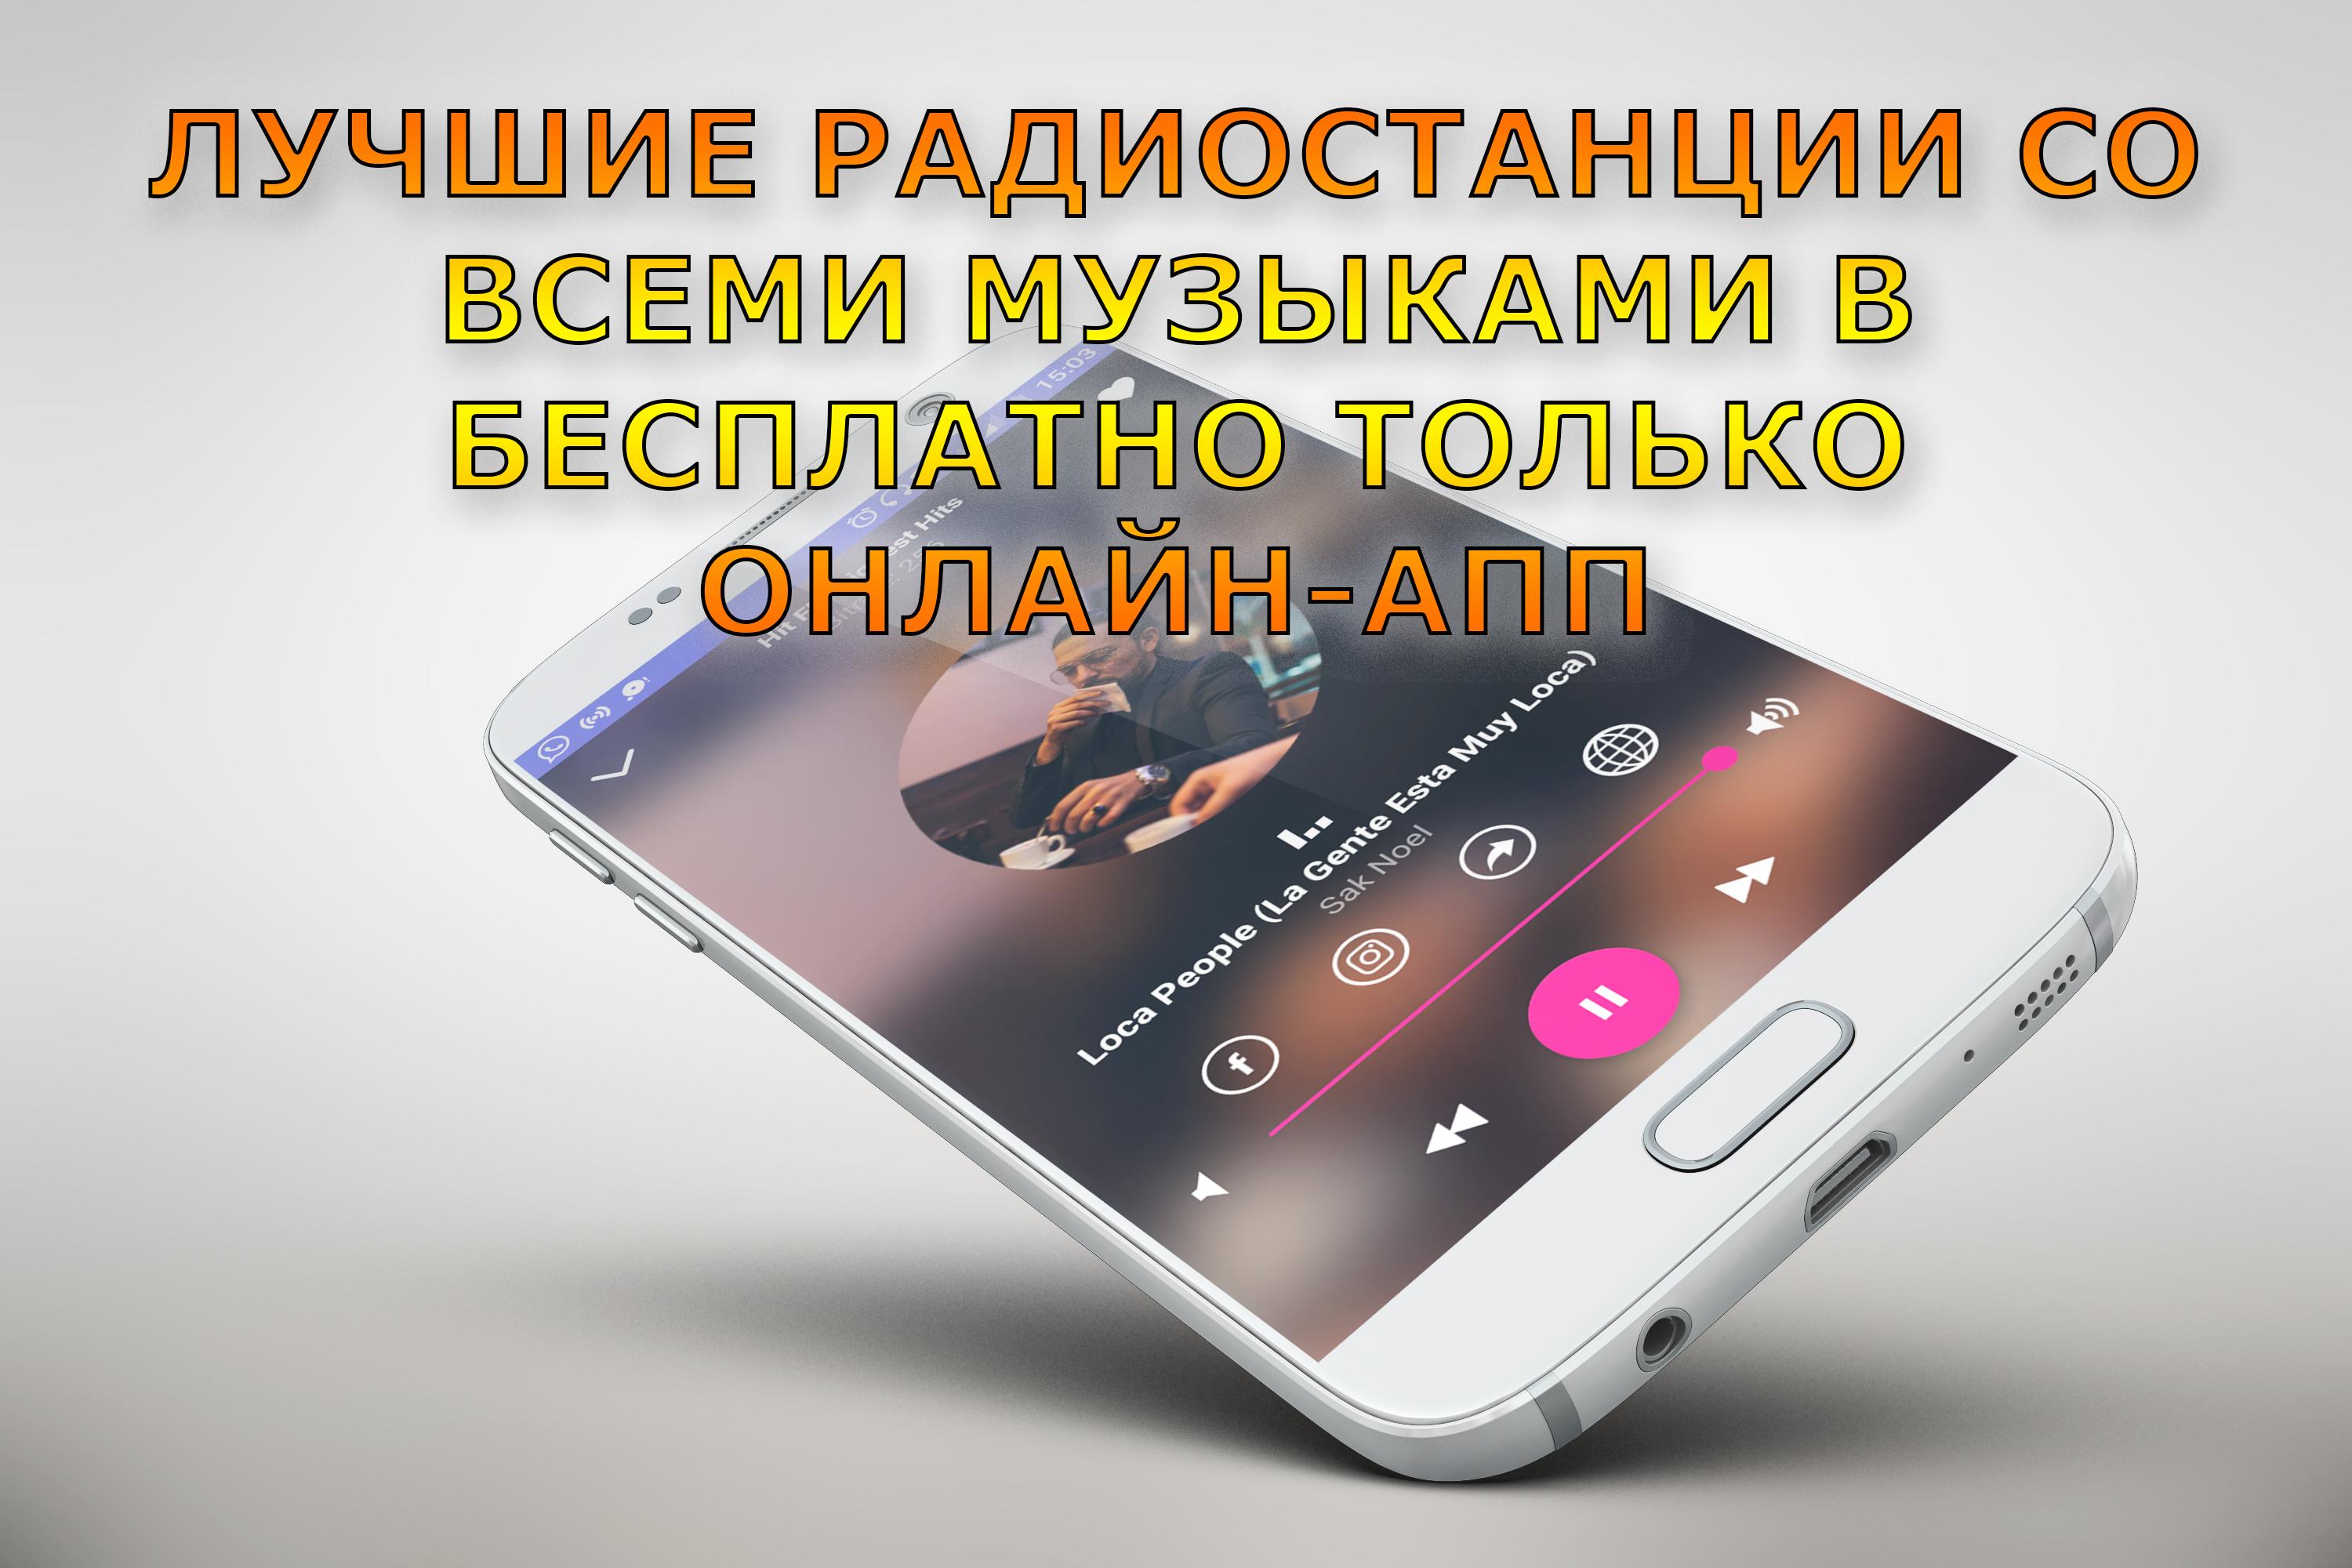 Radio Samara for Android - APK Download